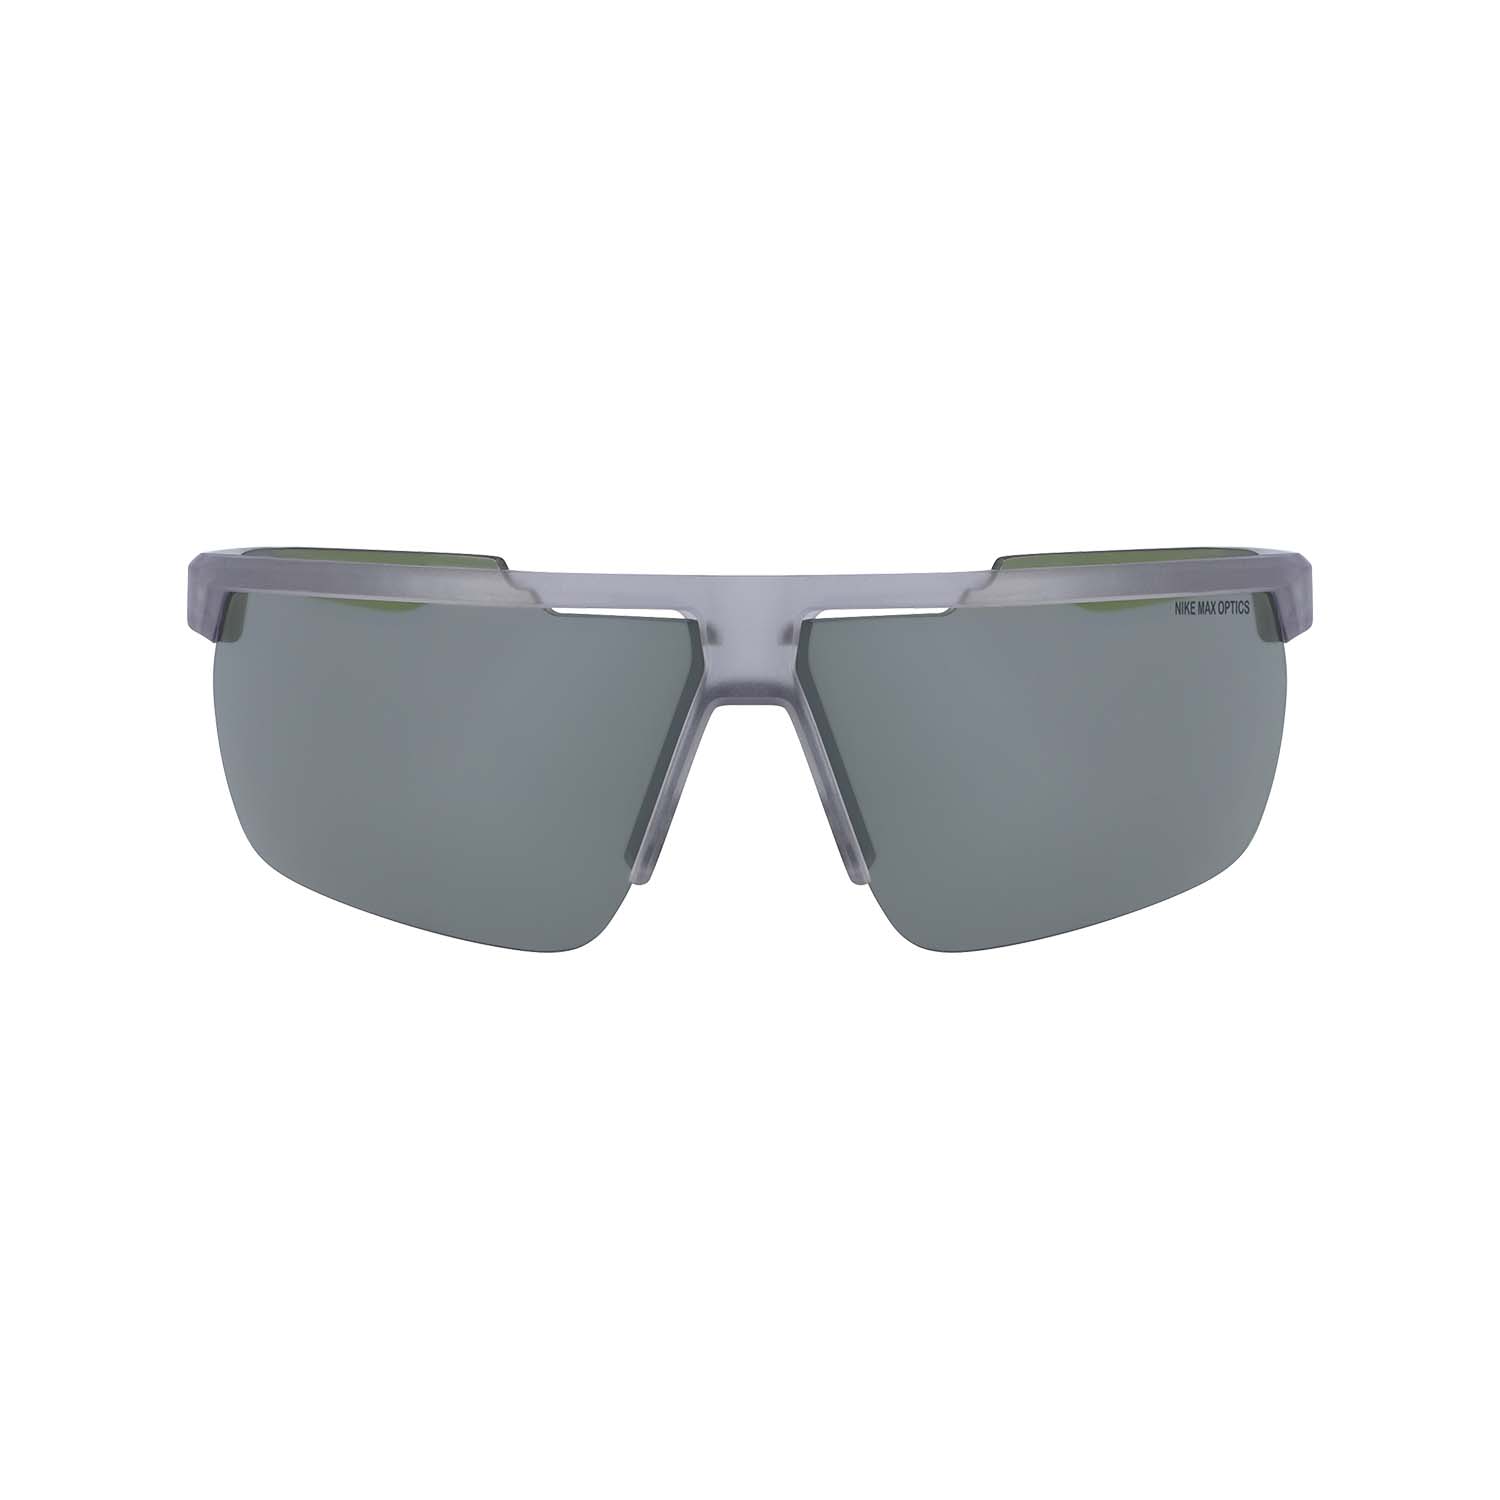 Nike Windshield Sunglasses - Matte Wolf Grey/Silver Mirror